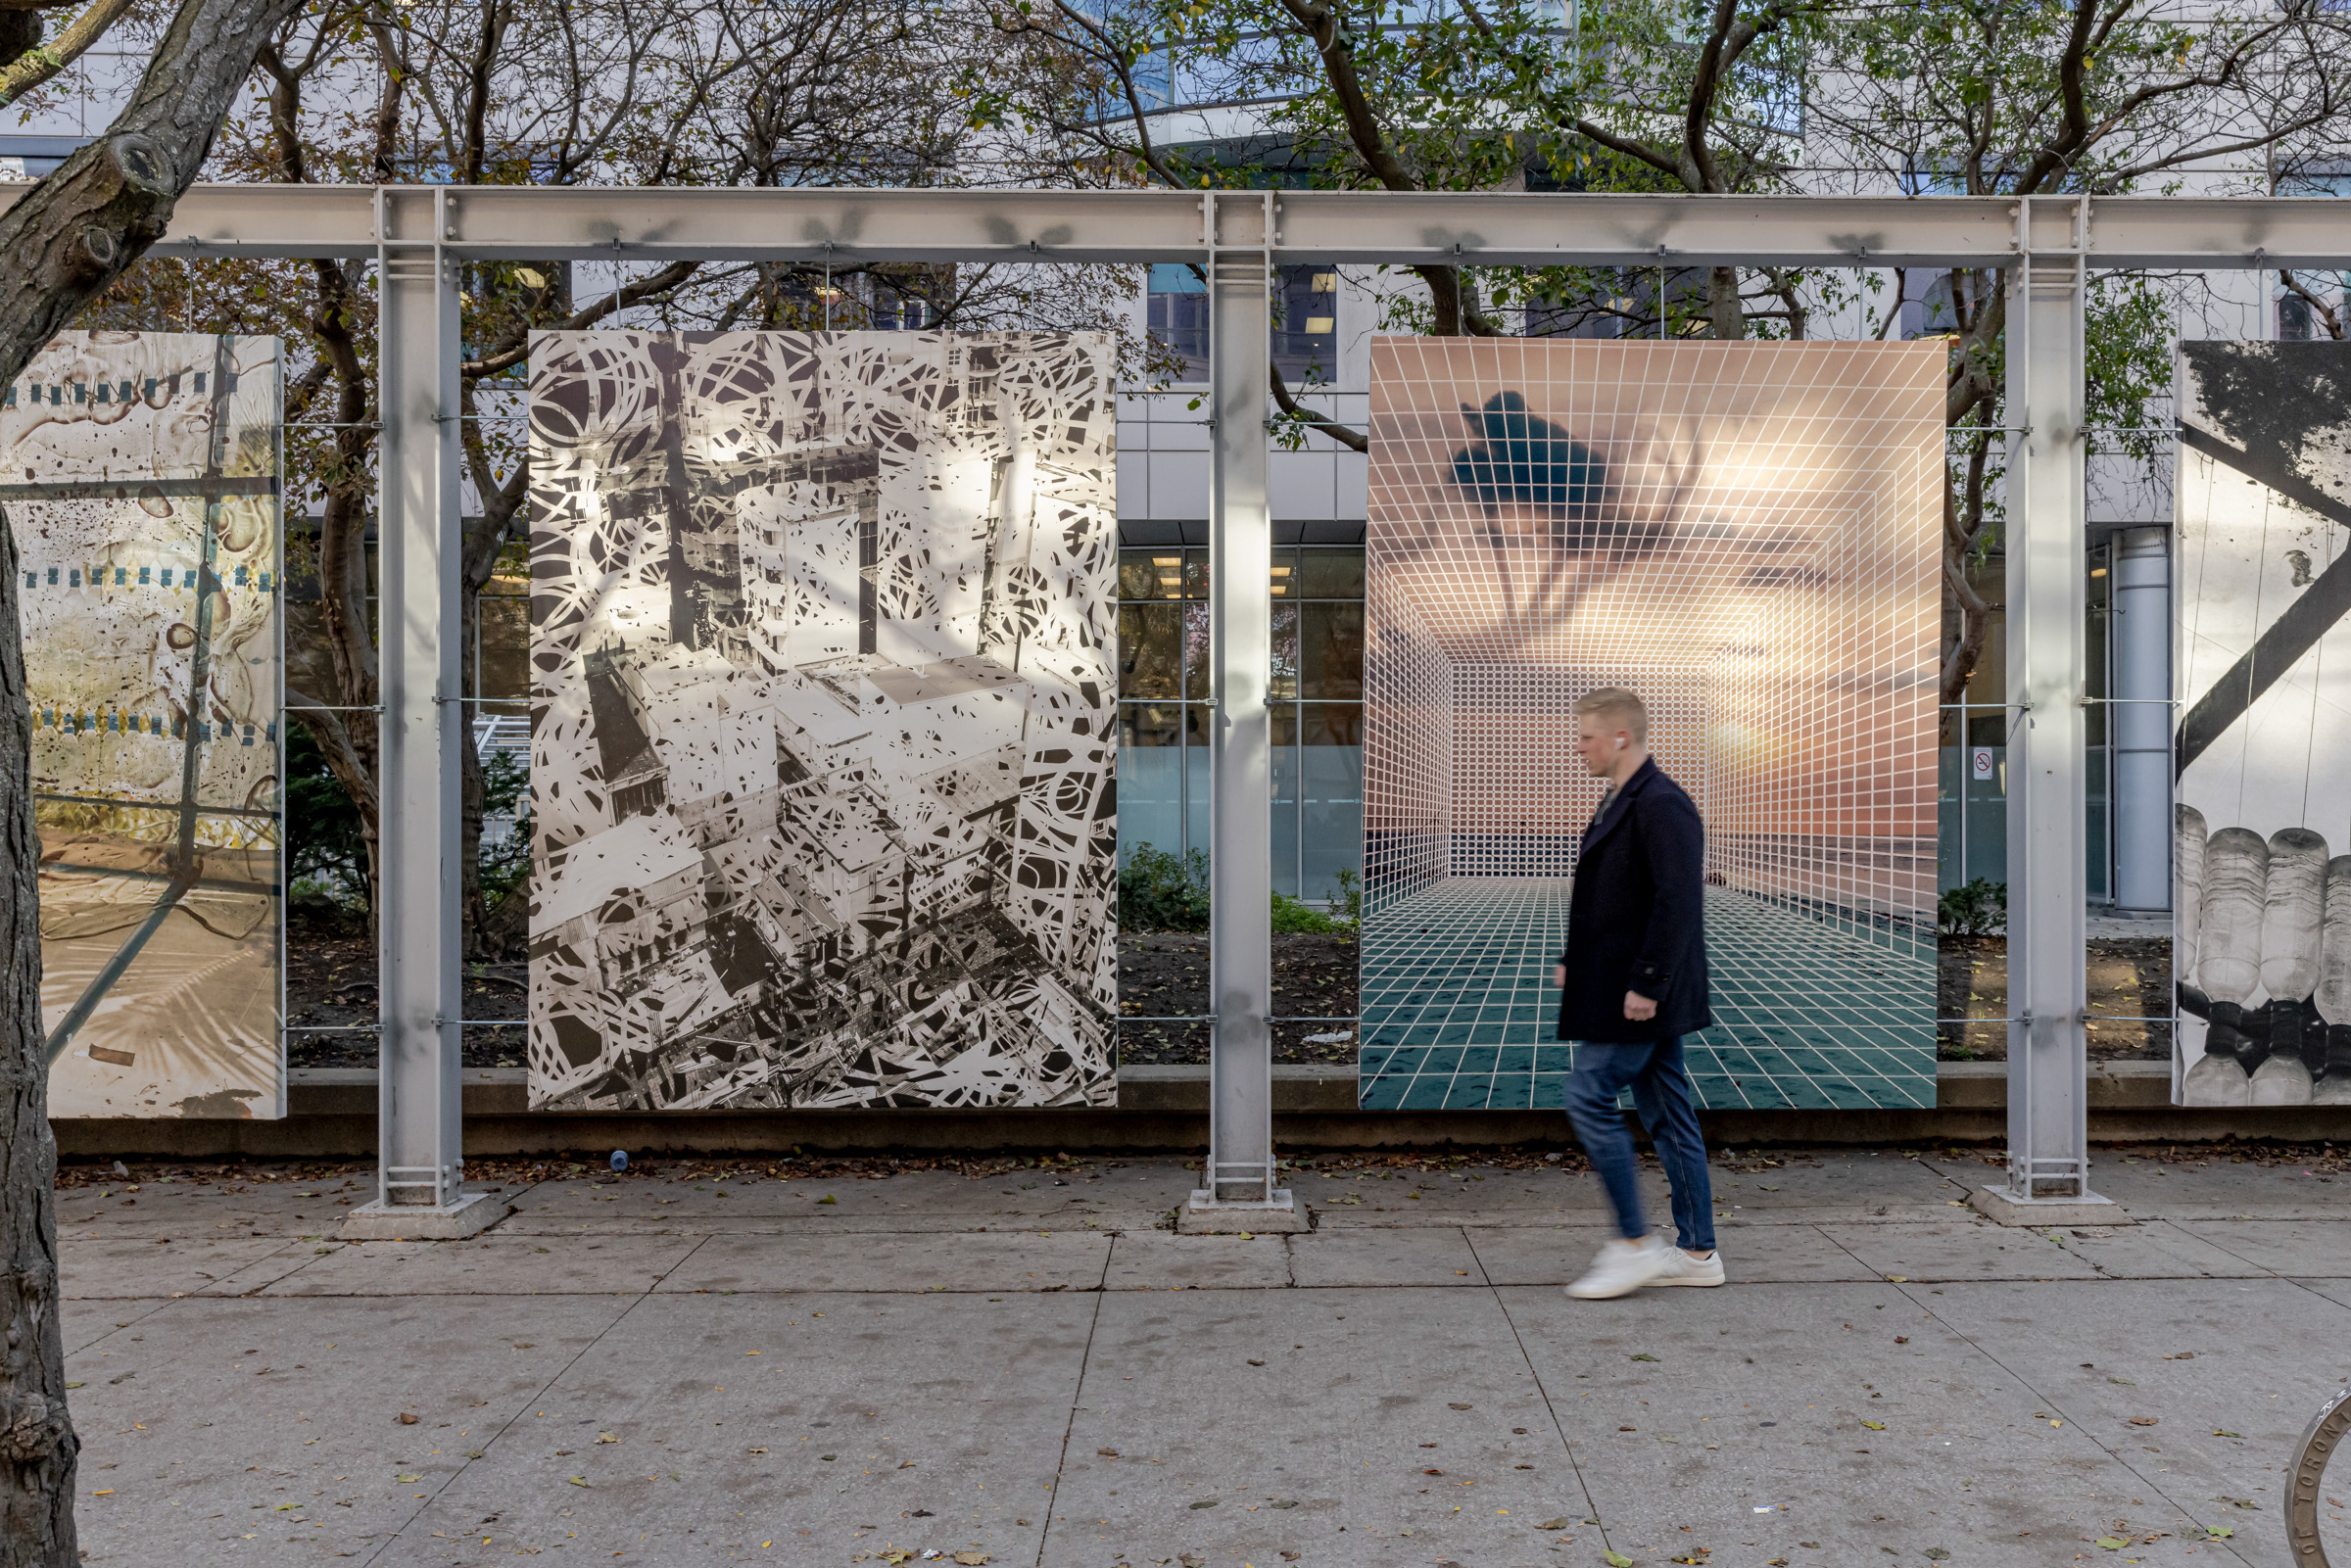     Taiyo Onorato & Nico Krebs, Future Perfect, installation at Metro Hall, along King St W at John St, Toronto, 2021. Courtesy of the artists, Sies+Hoeke, and CONTACT. Photo: Toni Hafkenscheid

